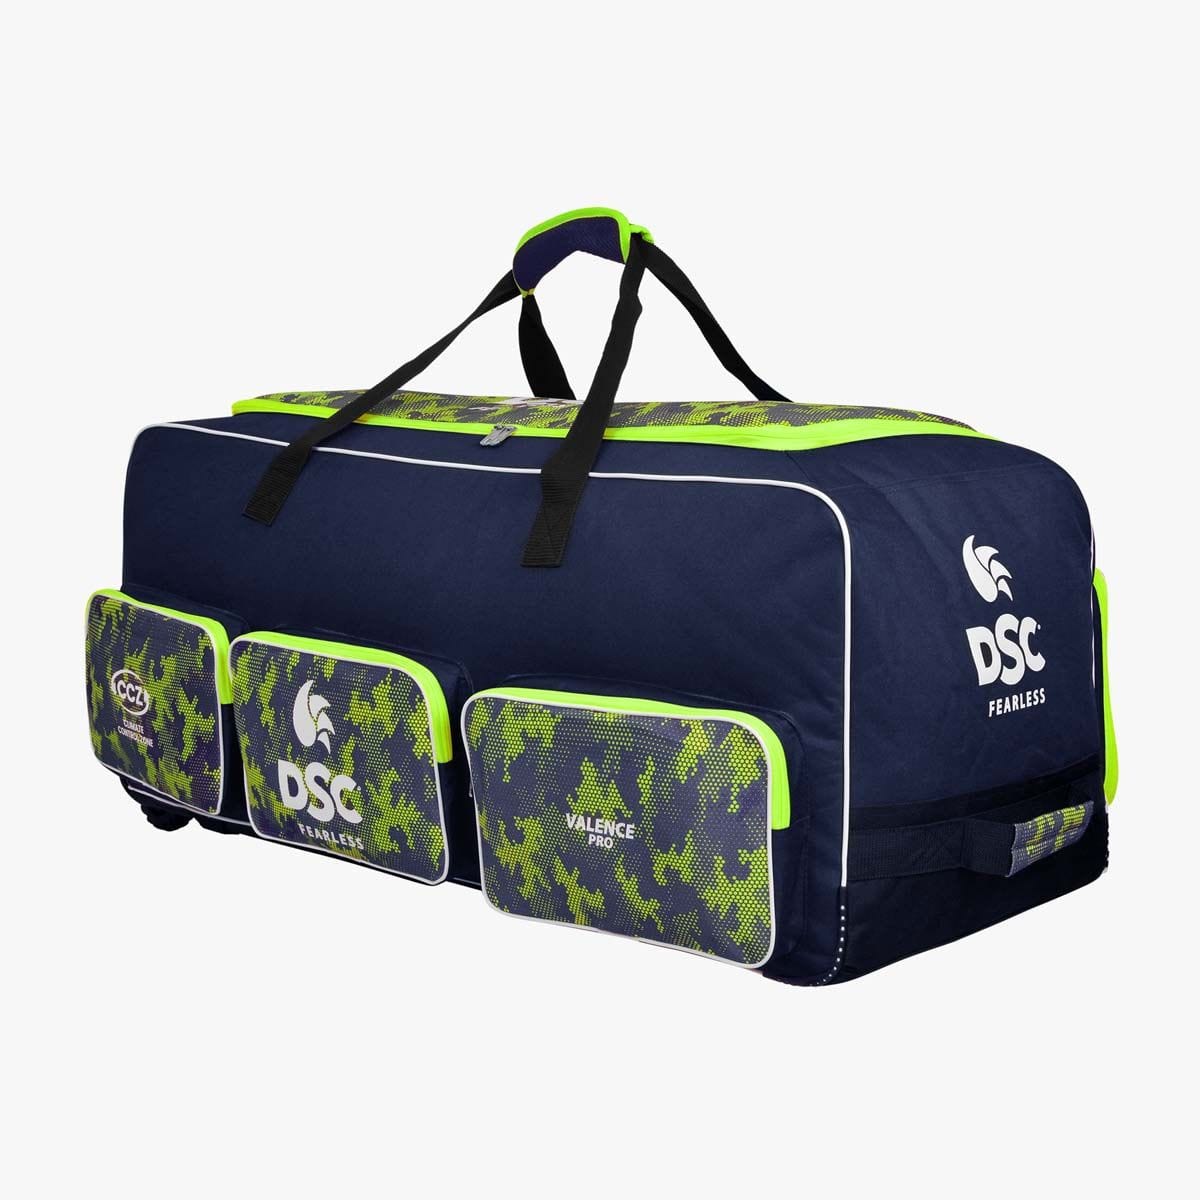 Adidas Cricket Bags DSC Valence Camo Pro Wheels Cricket Bag